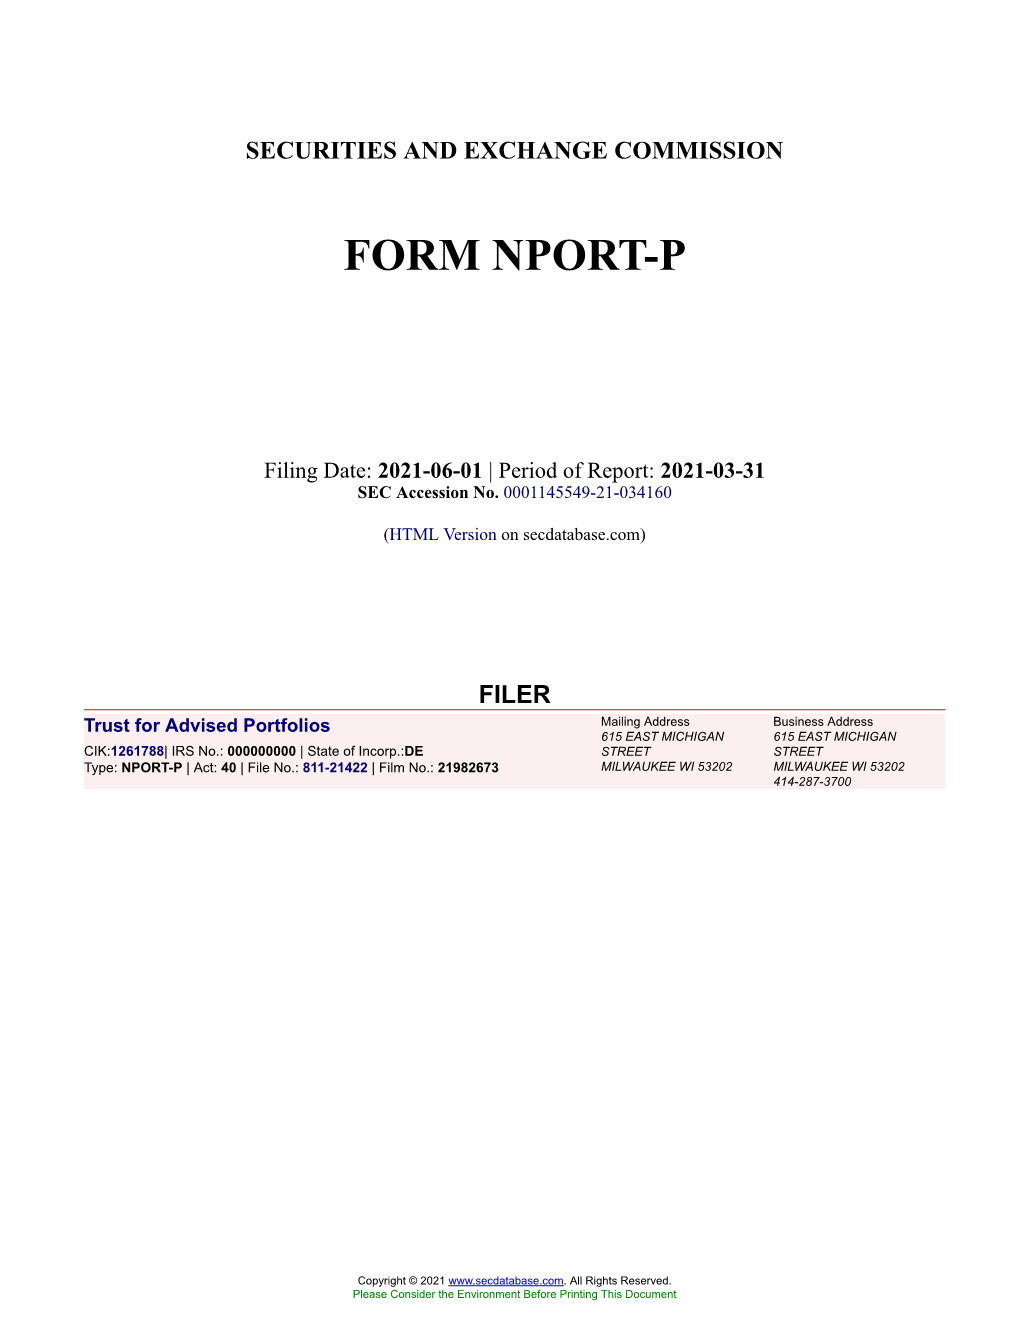 Trust for Advised Portfolios Form NPORT-P Filed 2021-06-01